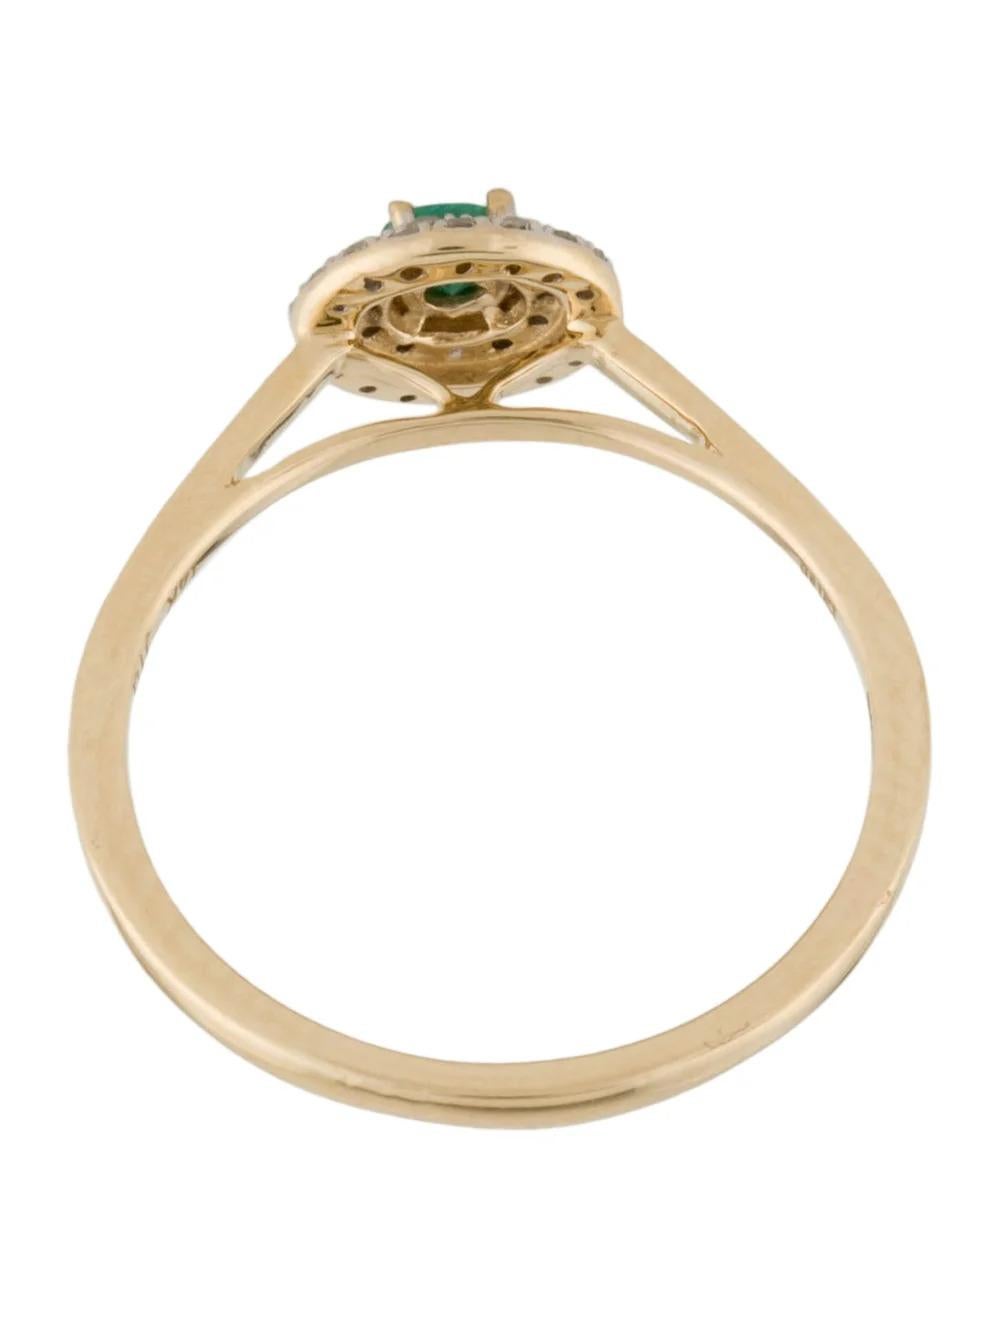 Women's Vintage 14K Emerald Diamond Cocktail Ring Size 6.5 - Fine Jewelry, Luxury Piece For Sale